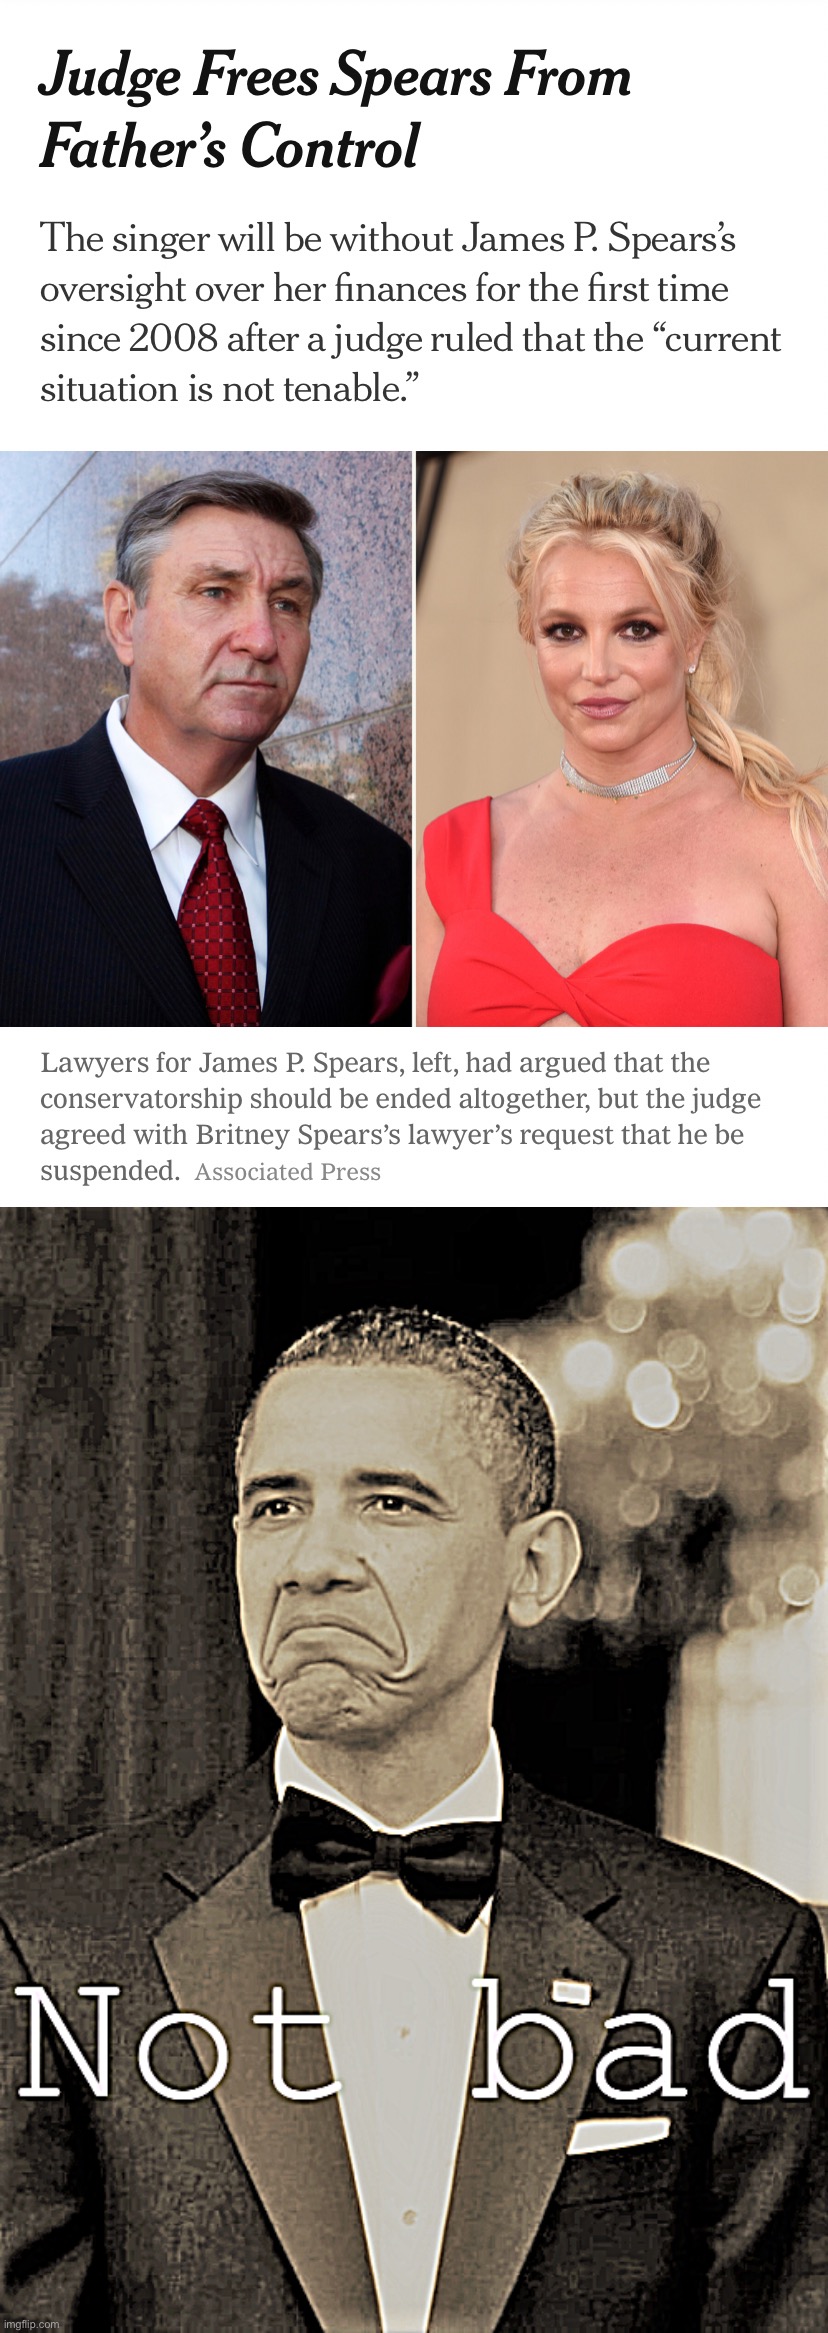 Eyyy Britney got freed today | image tagged in britney freed,barack obama not bad retro sharpened | made w/ Imgflip meme maker